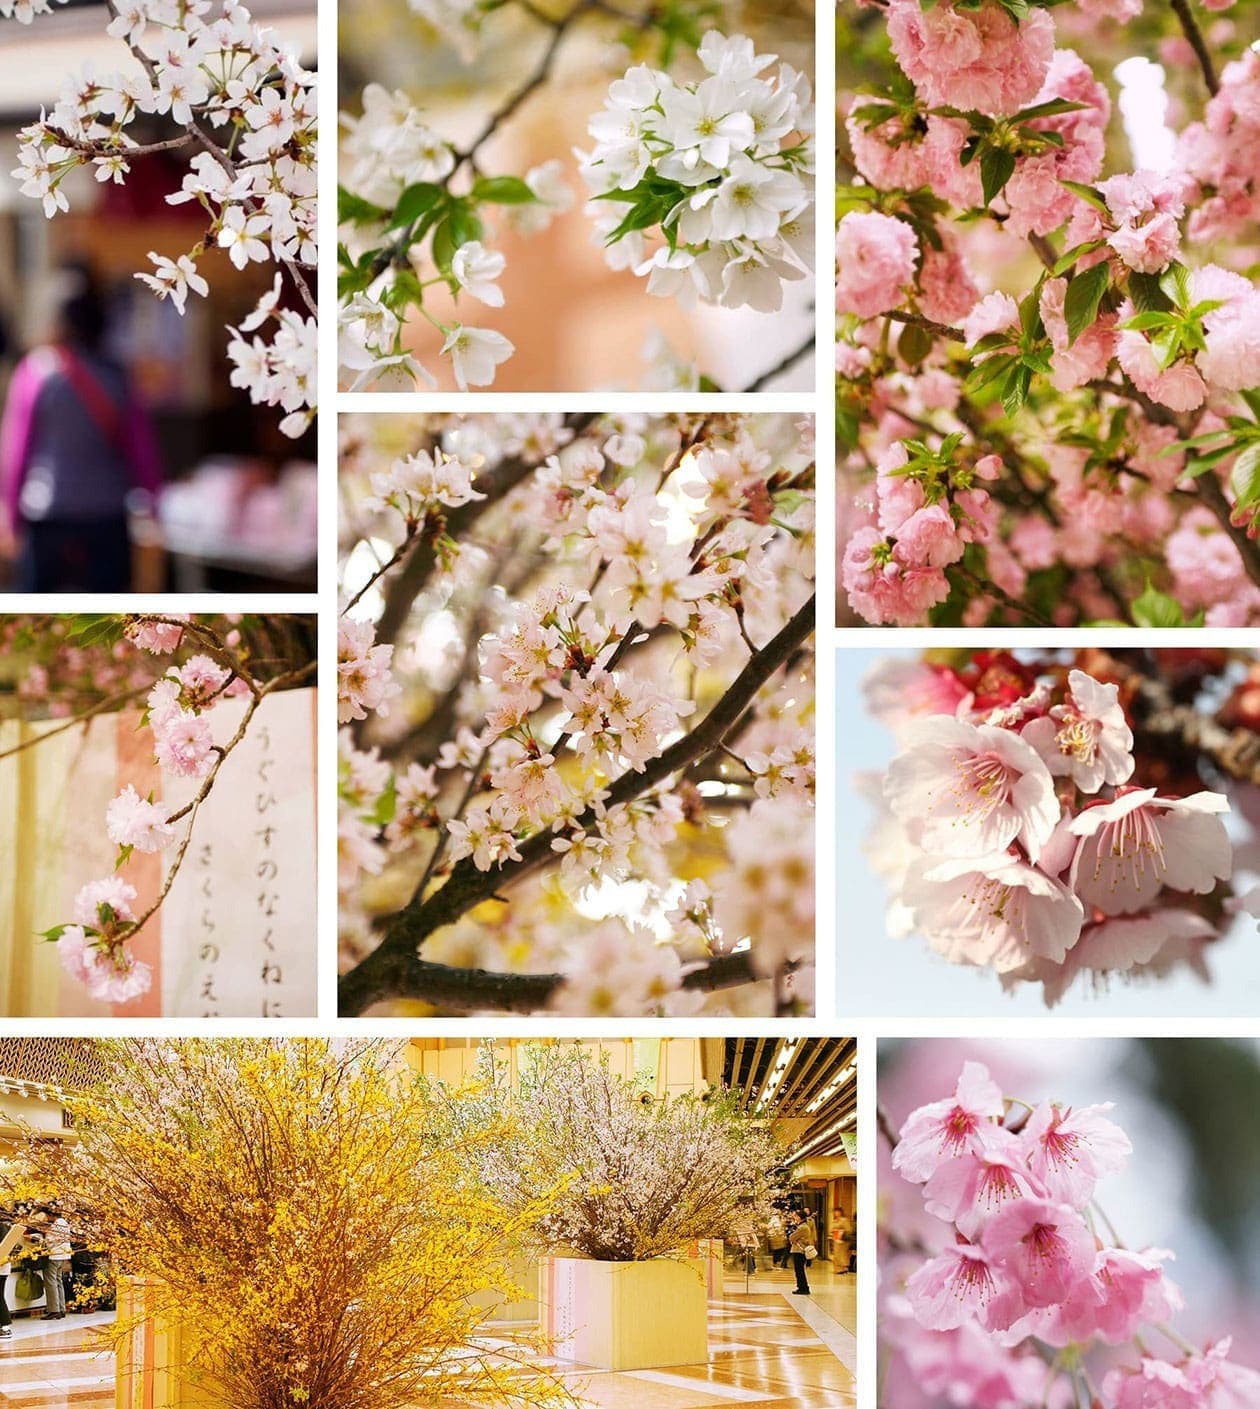 桜の装飾